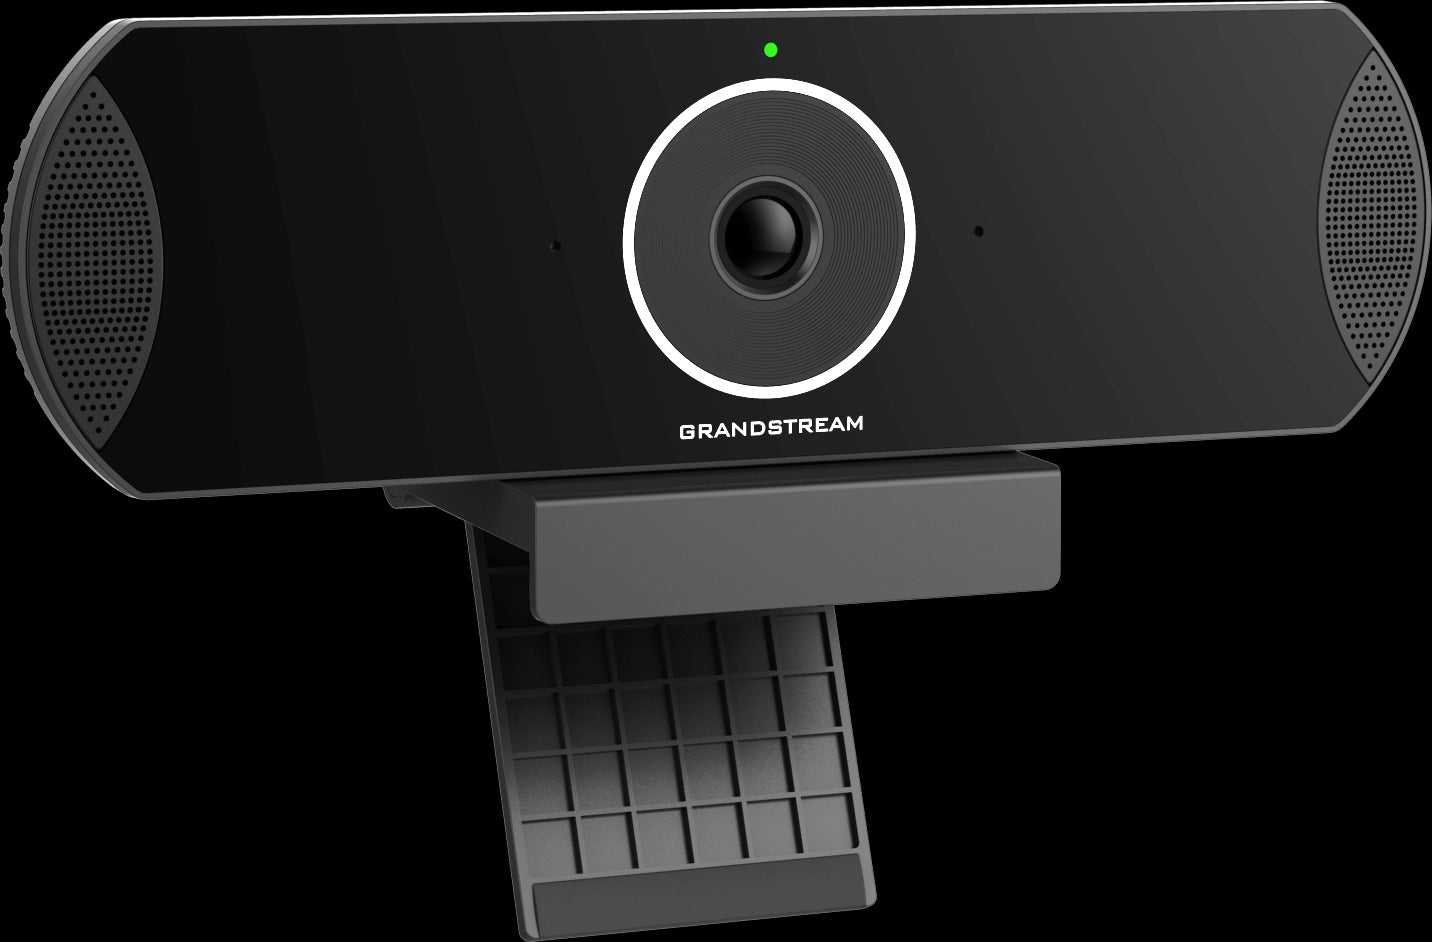 Grandstream 2-Way Video Conferencing, HD Audio, Bluetooth, Wi-Fi